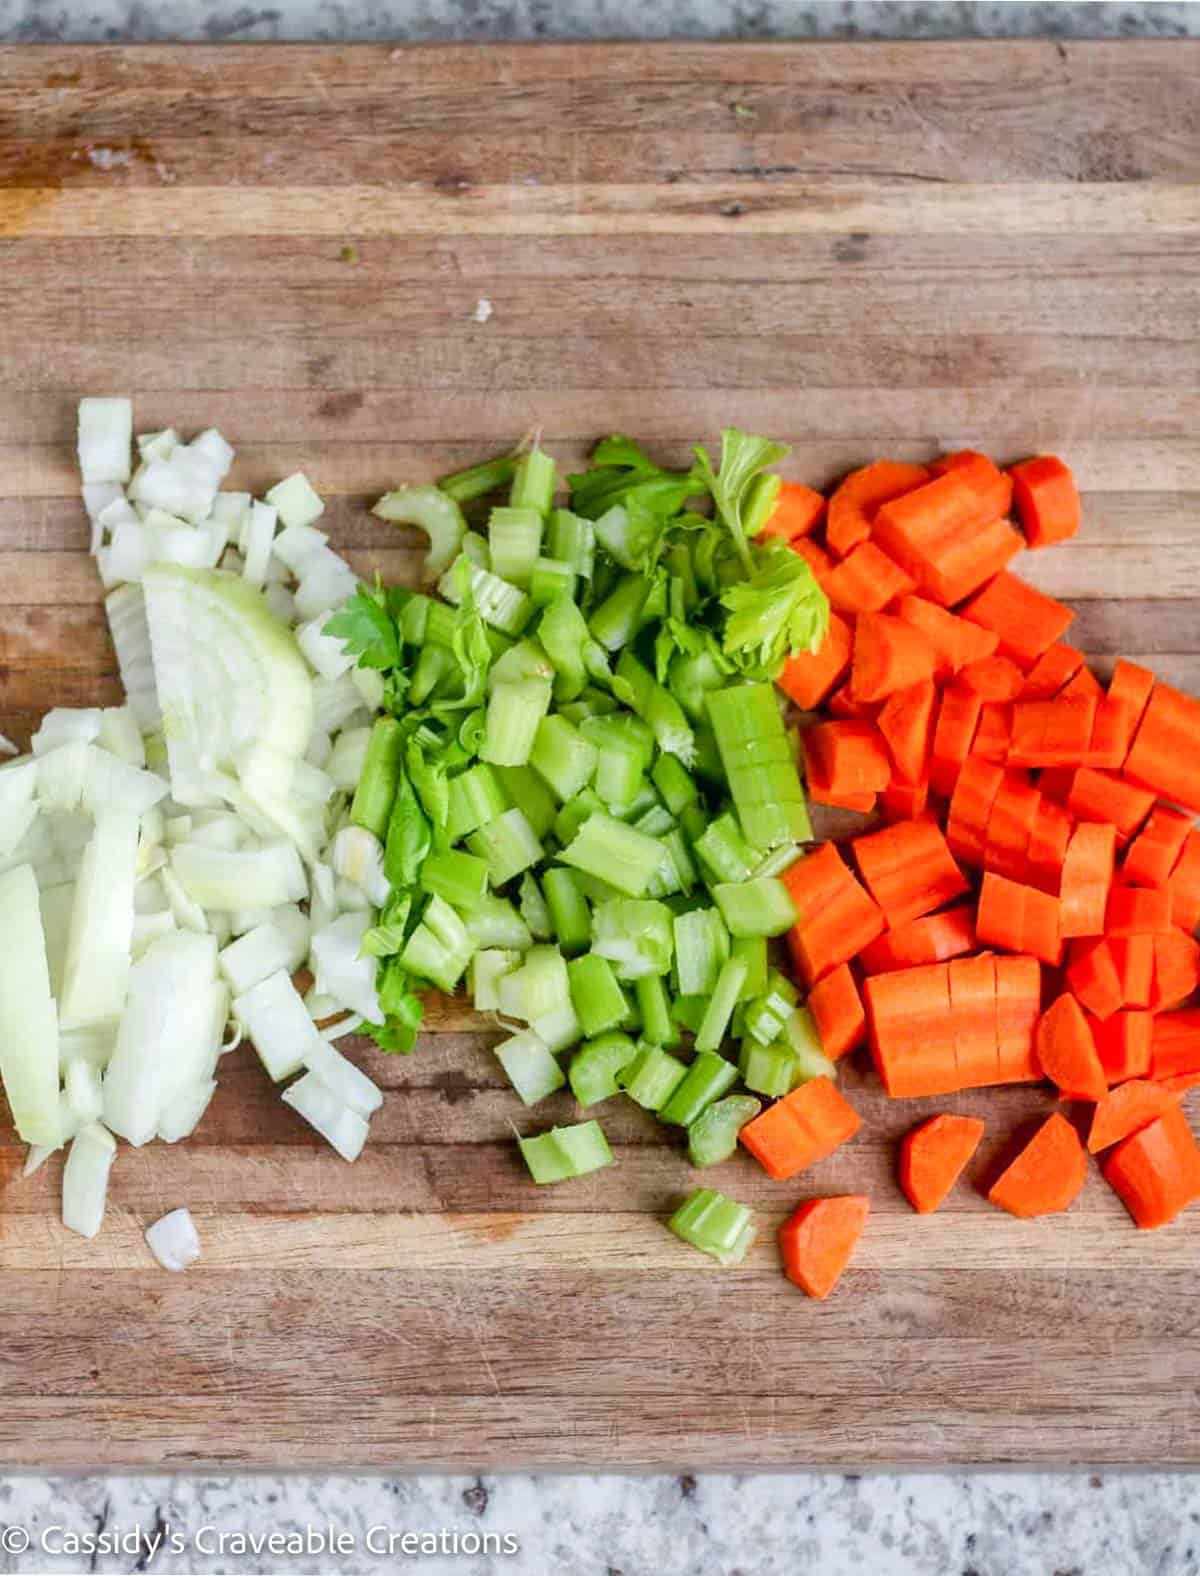 chopped veggies on wooden cutting board